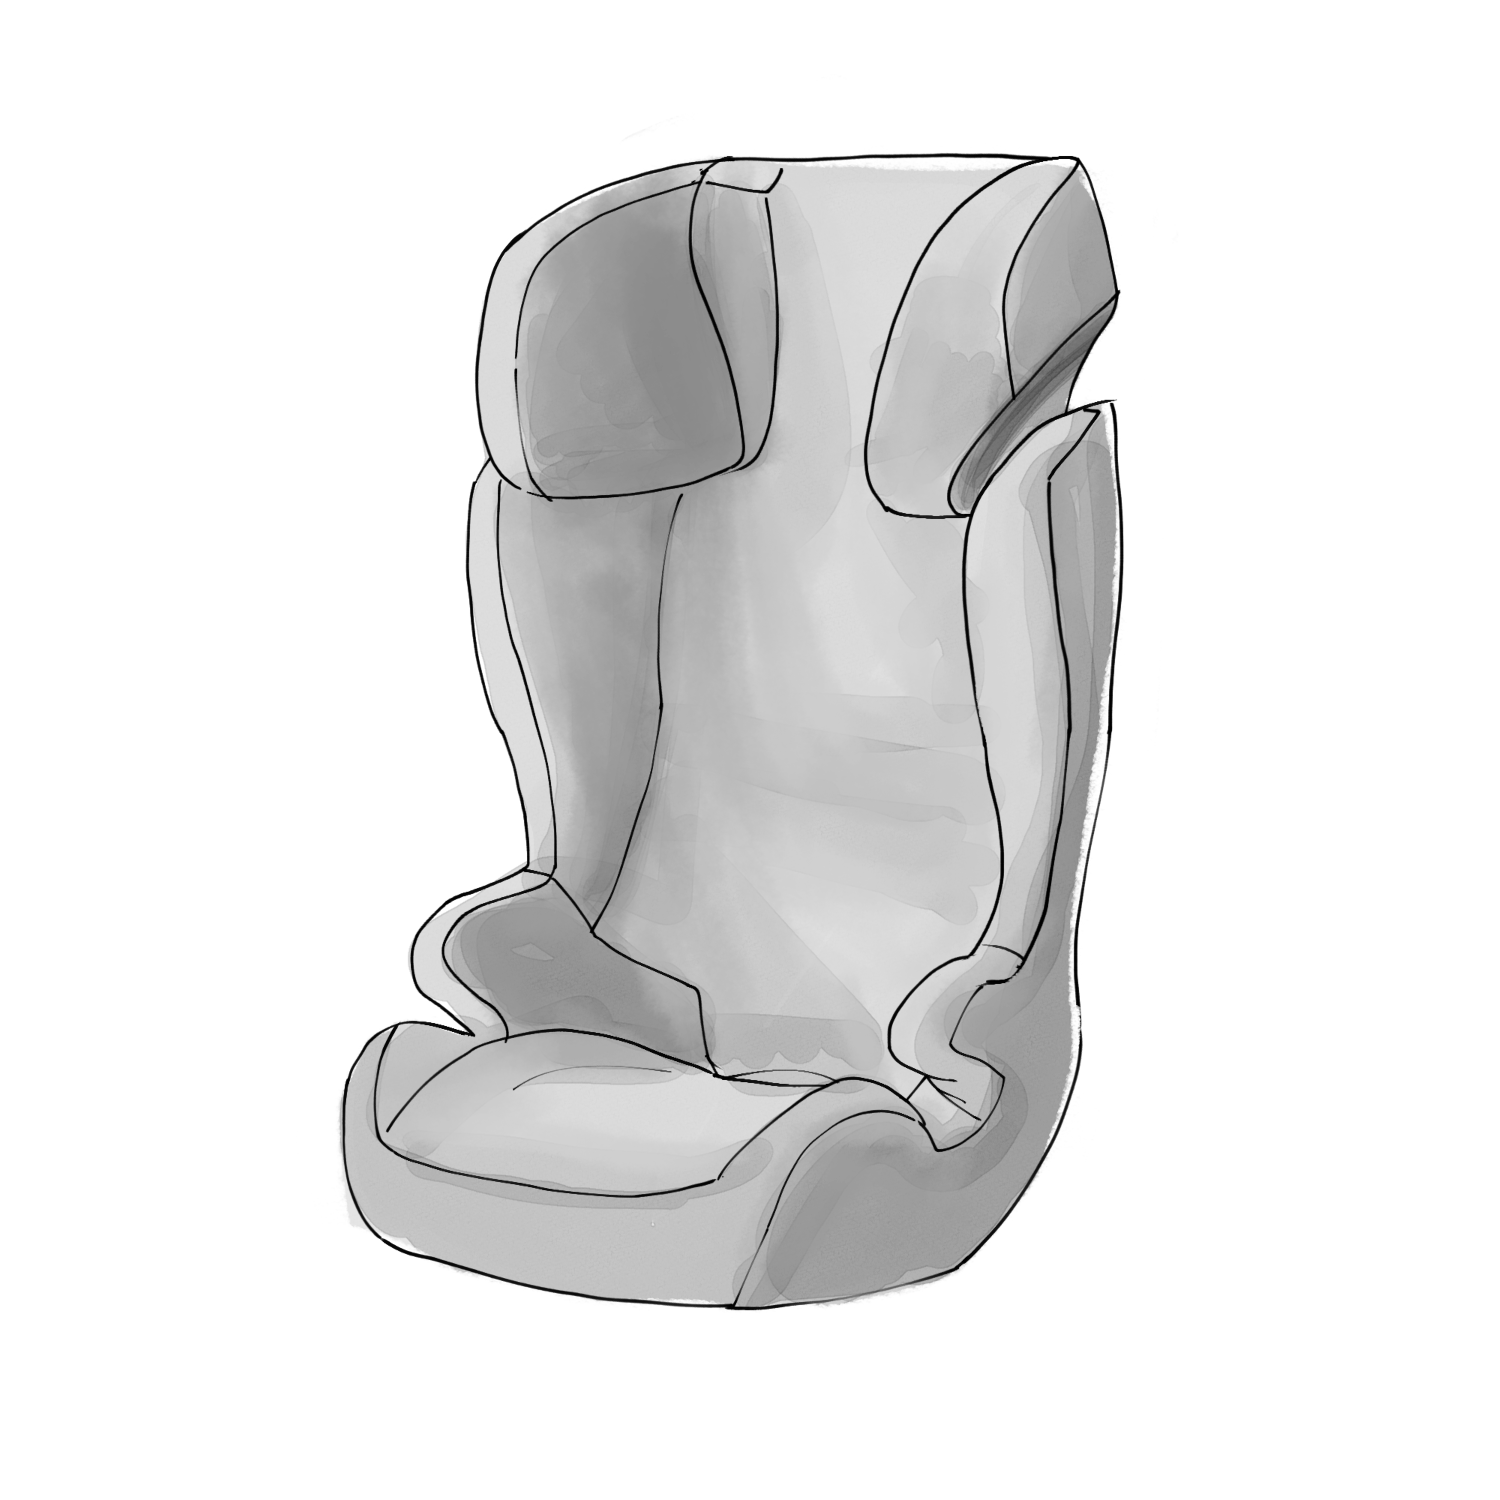  Artikelbild 1 des Artikels “Kindersitz Kompakt “